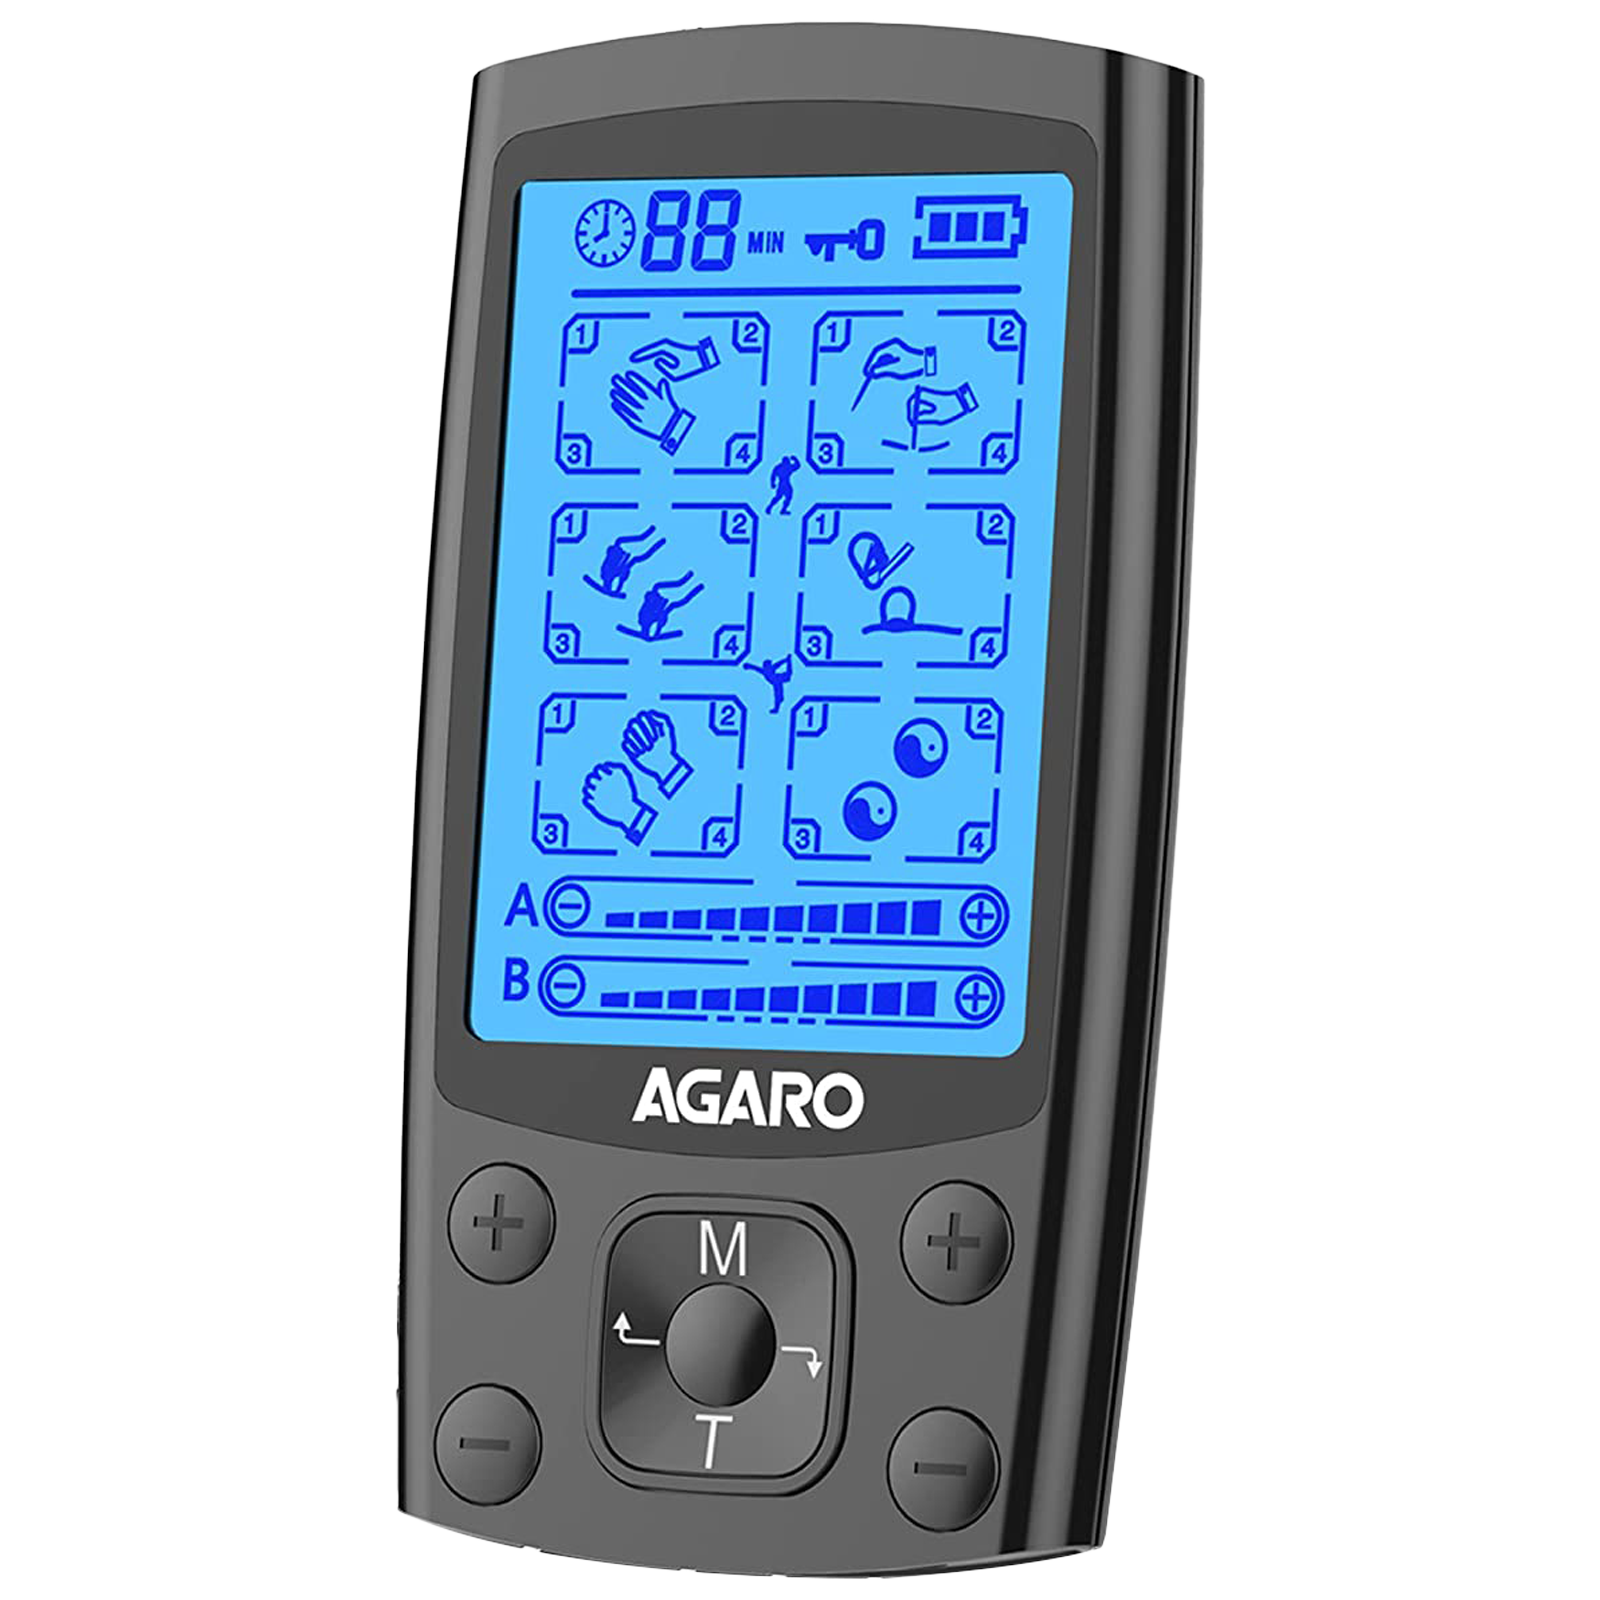 AGARO Tens Dual Channel Knee, Back, Neck Massager (20 Intensity Levels, 33536, Black)